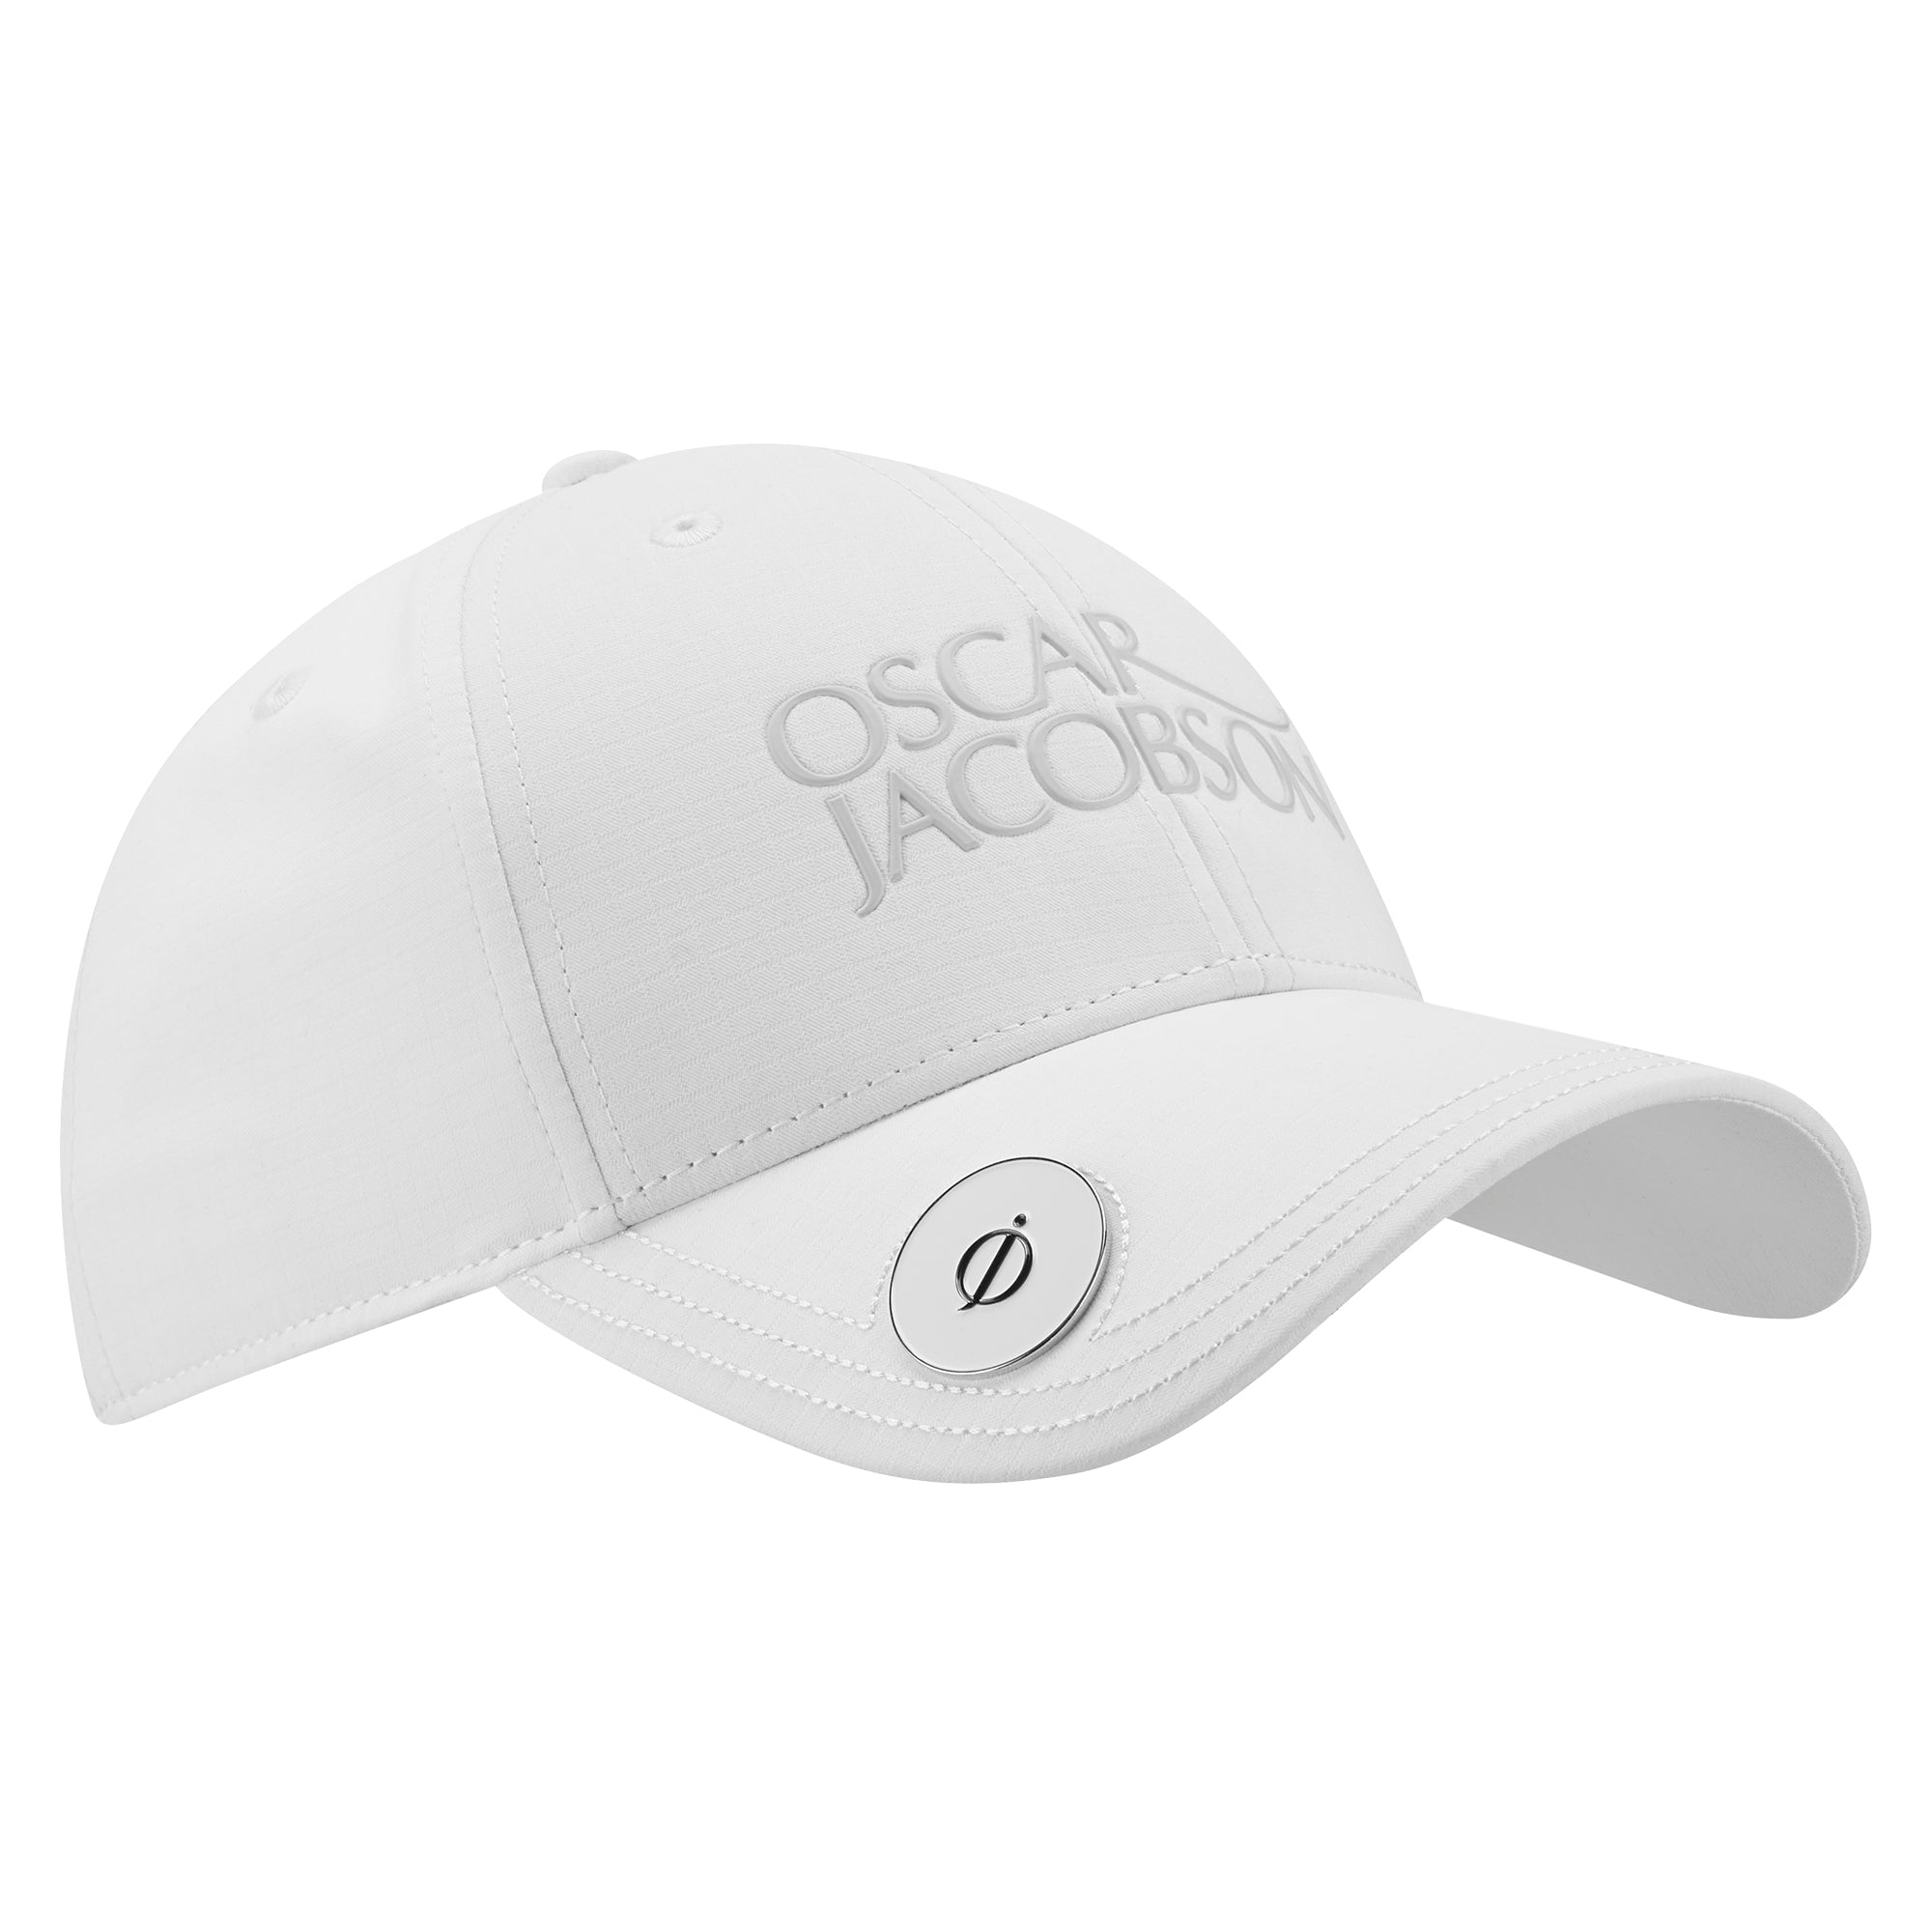 oscar-jacobson-maine-golf-cap-ojcap0069-white-grey